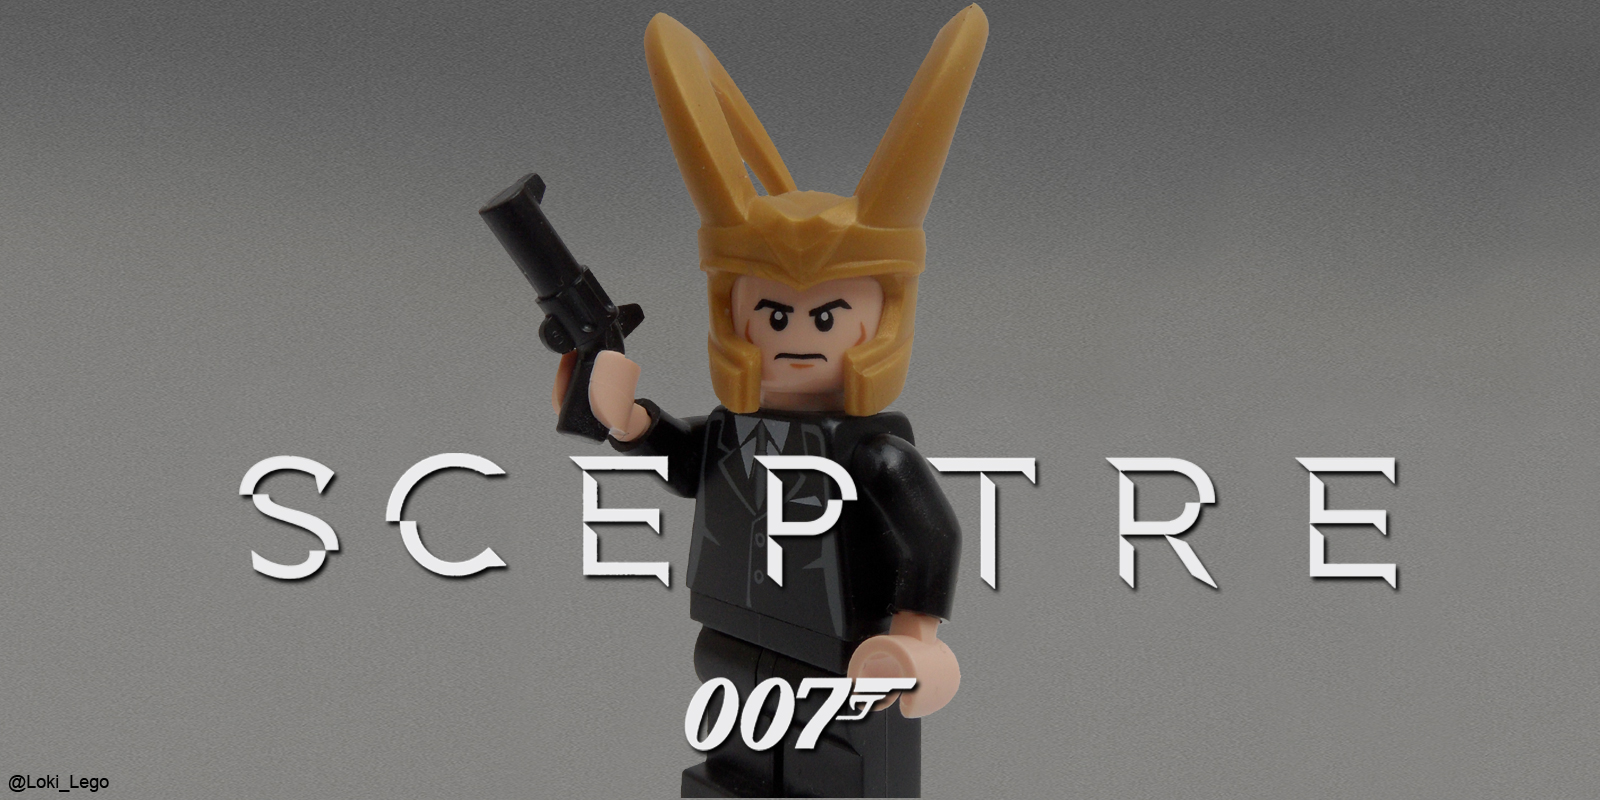 James-Bond-Sceptre-poster